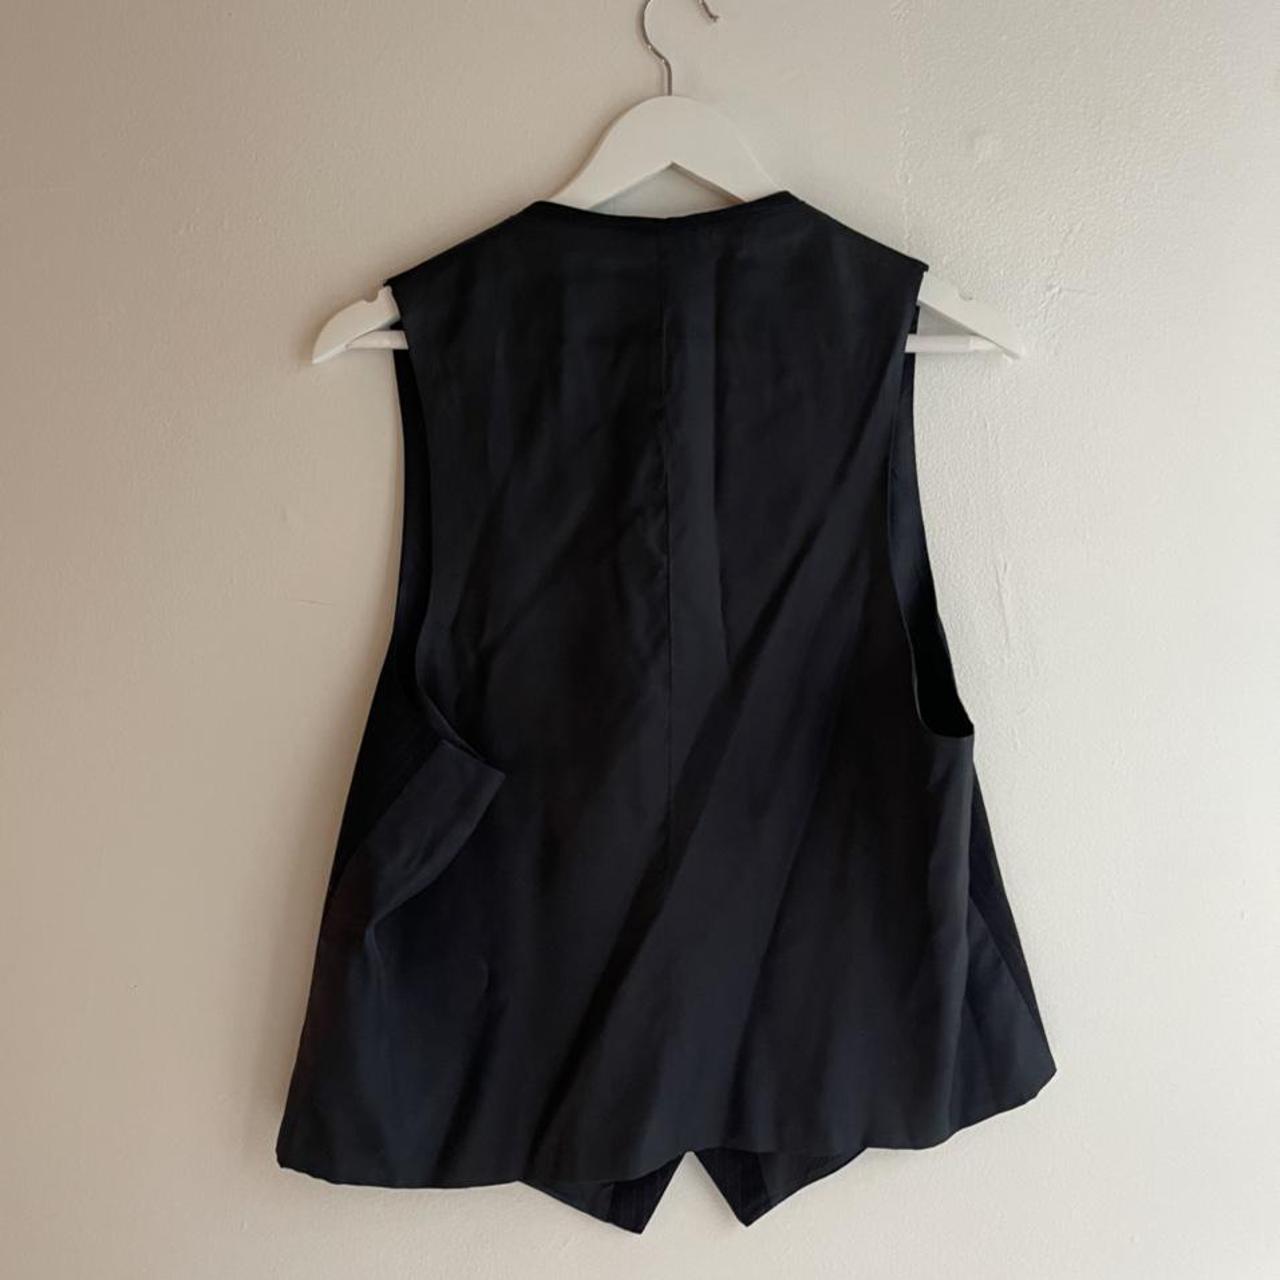 Product Image 2 - Black Striped Vest 

- no